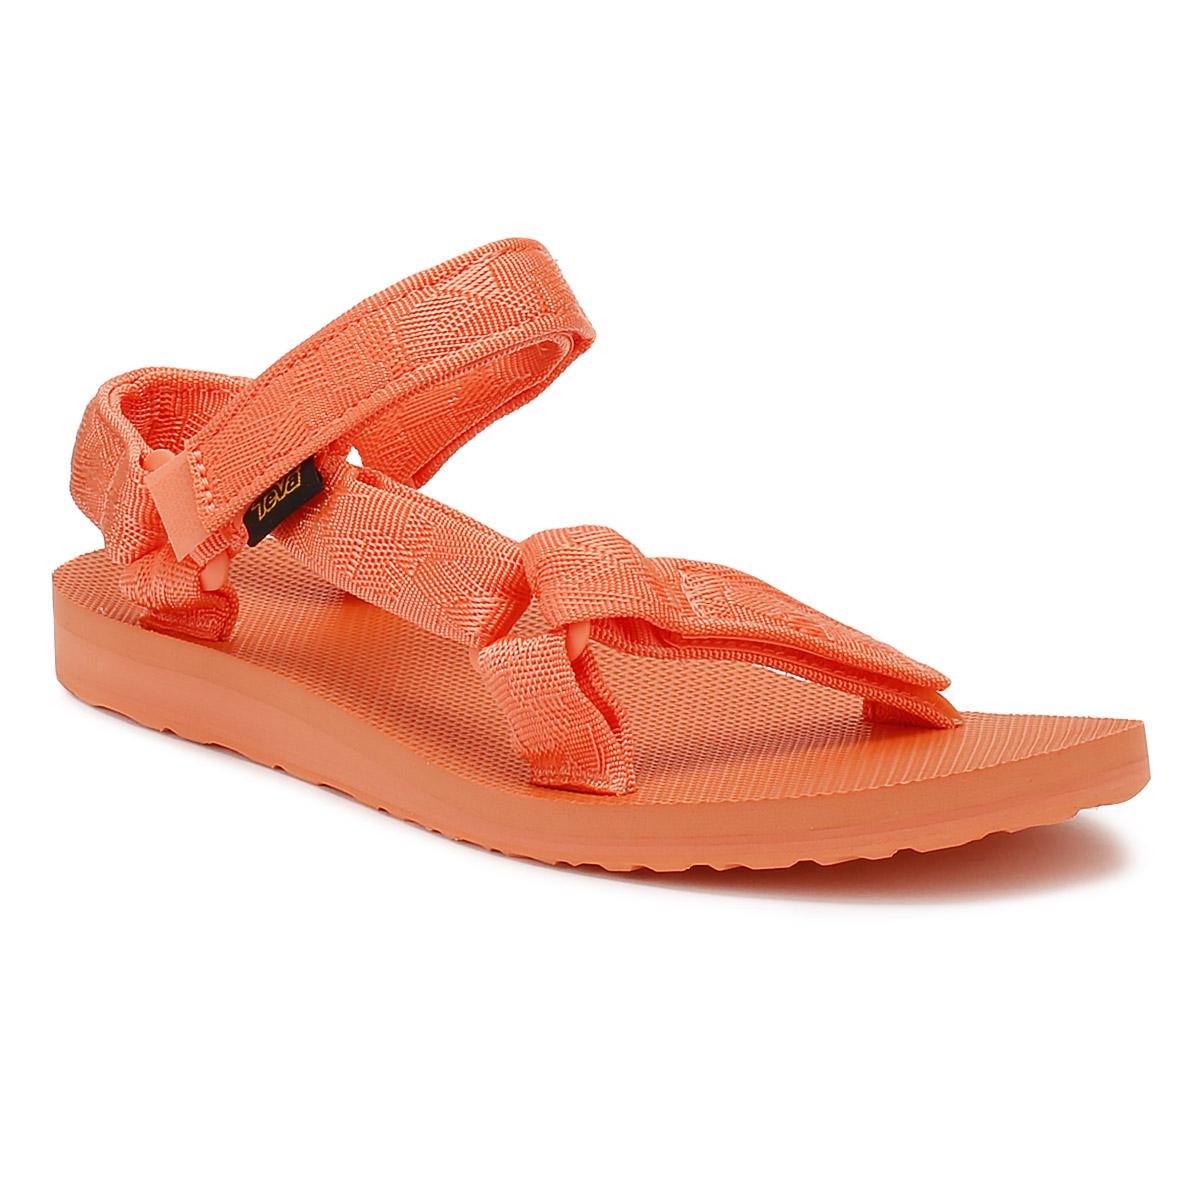 teva sandals orange cheap online